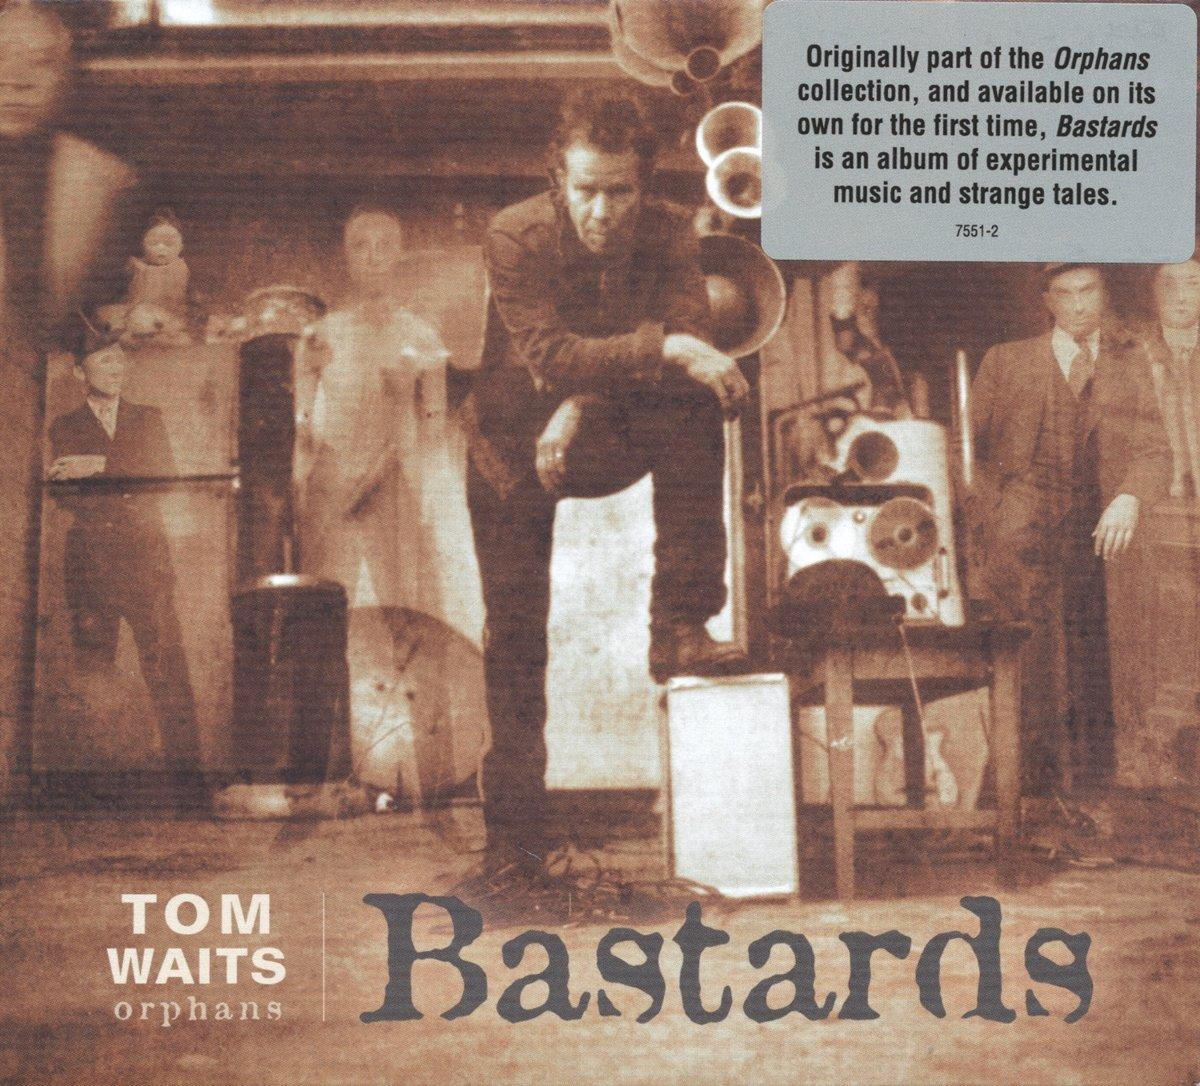 Tom Waits - Bastards (Vinyl) 